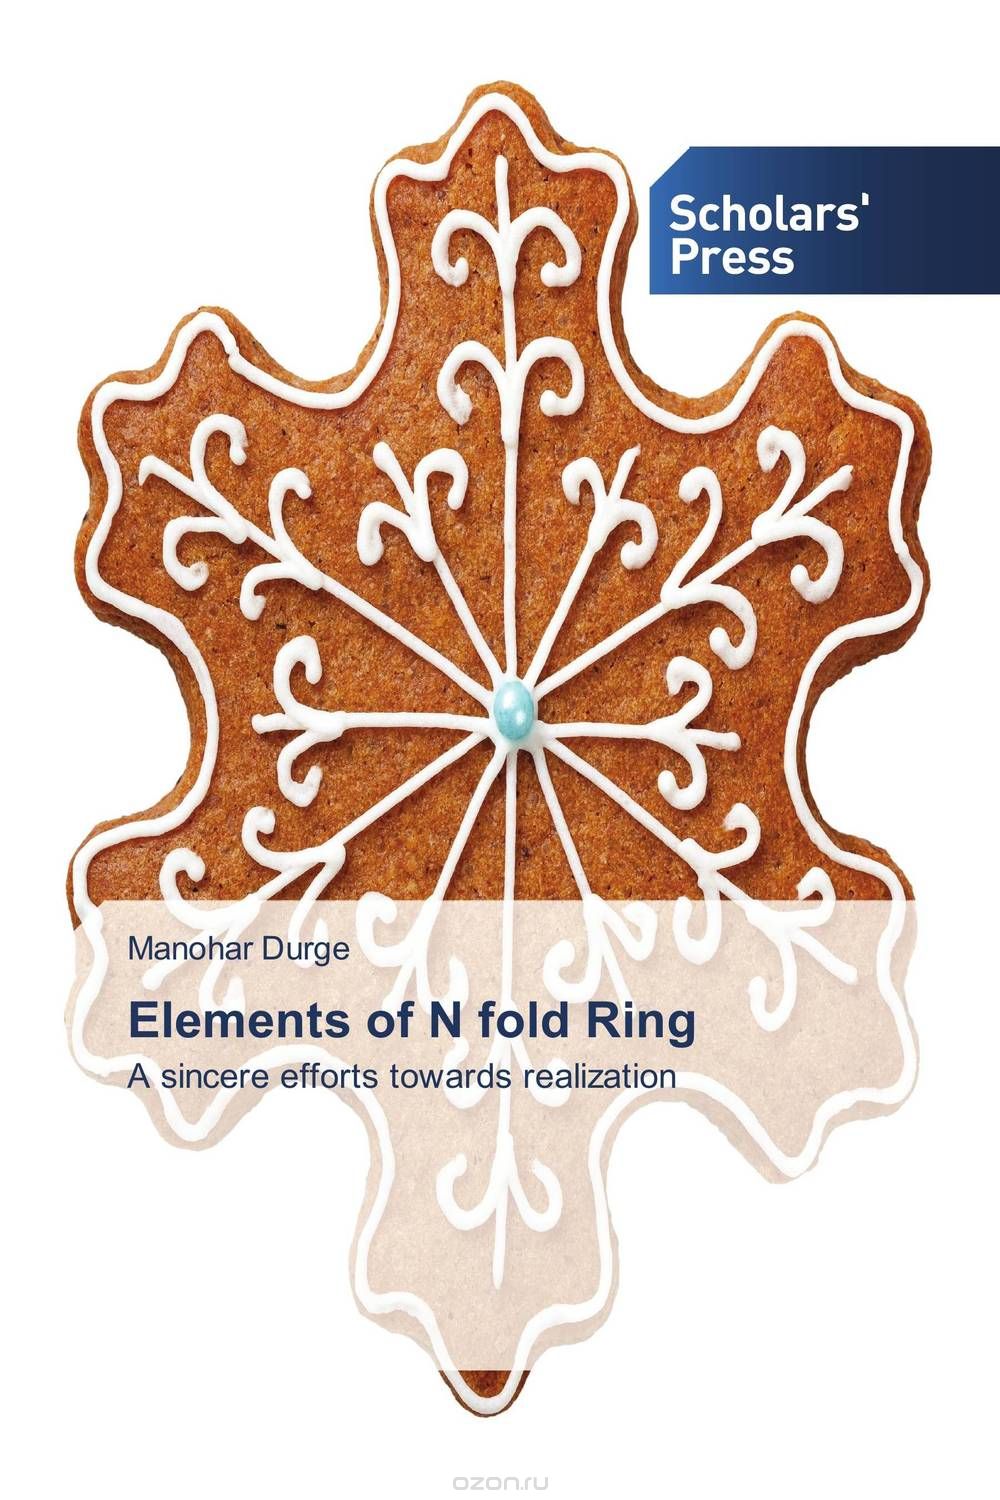 Скачать книгу "Elements of N fold Ring"